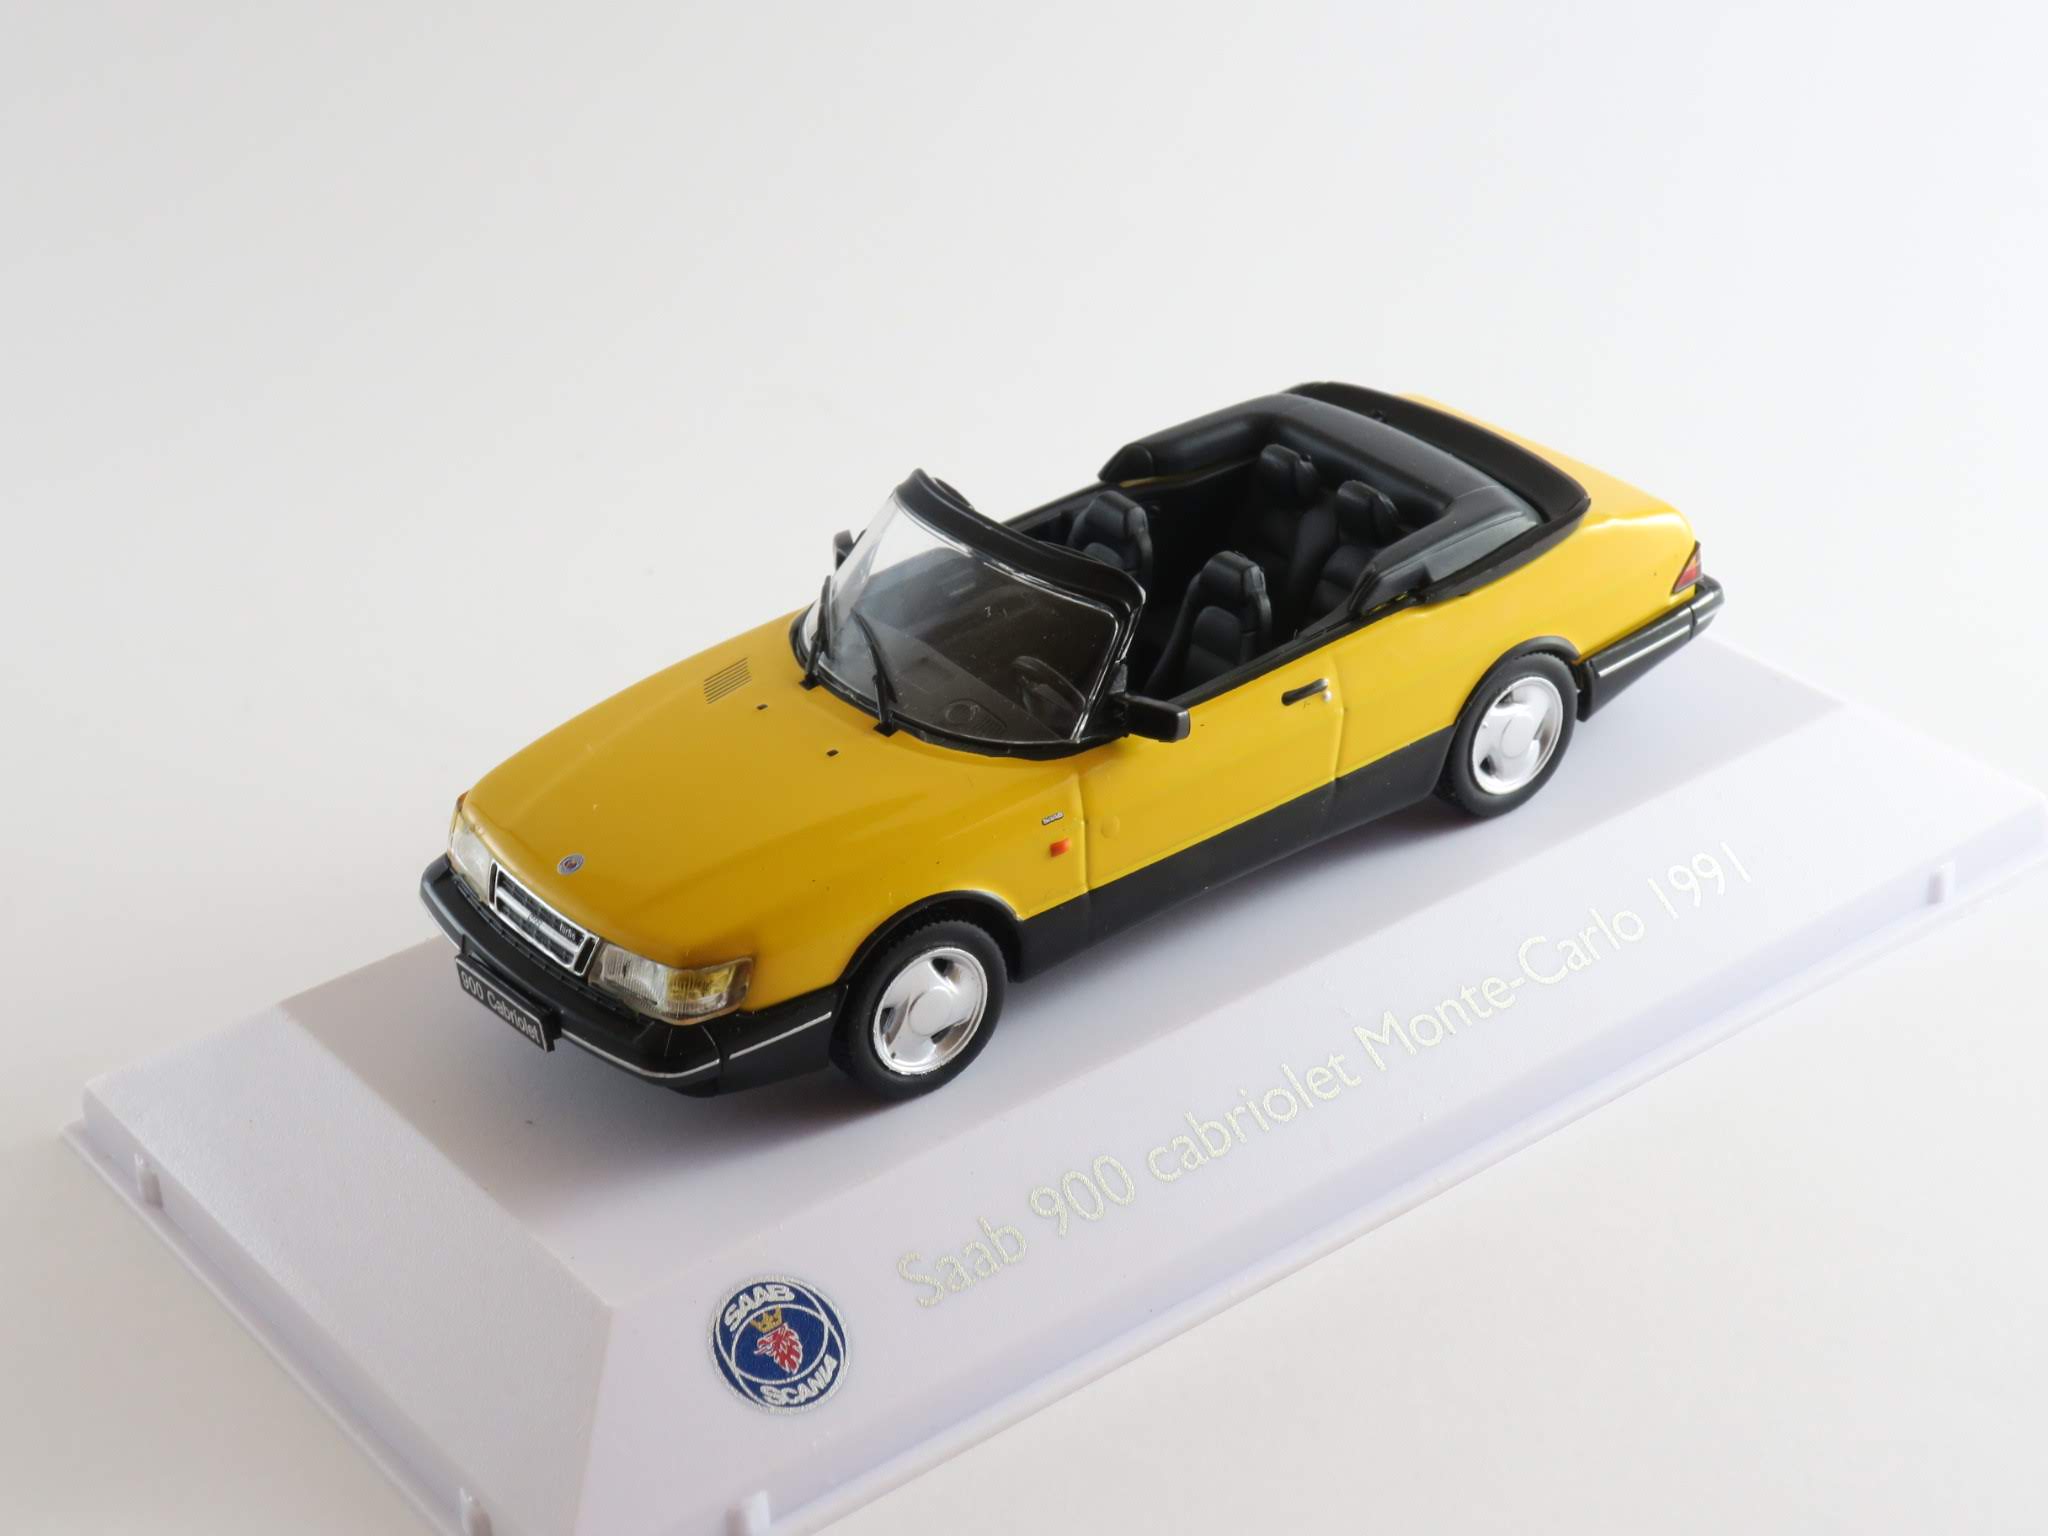 Saab 900 Convertible Monte-Carlo 1991 yellow diecast model car 3898004 Atlas 1:4